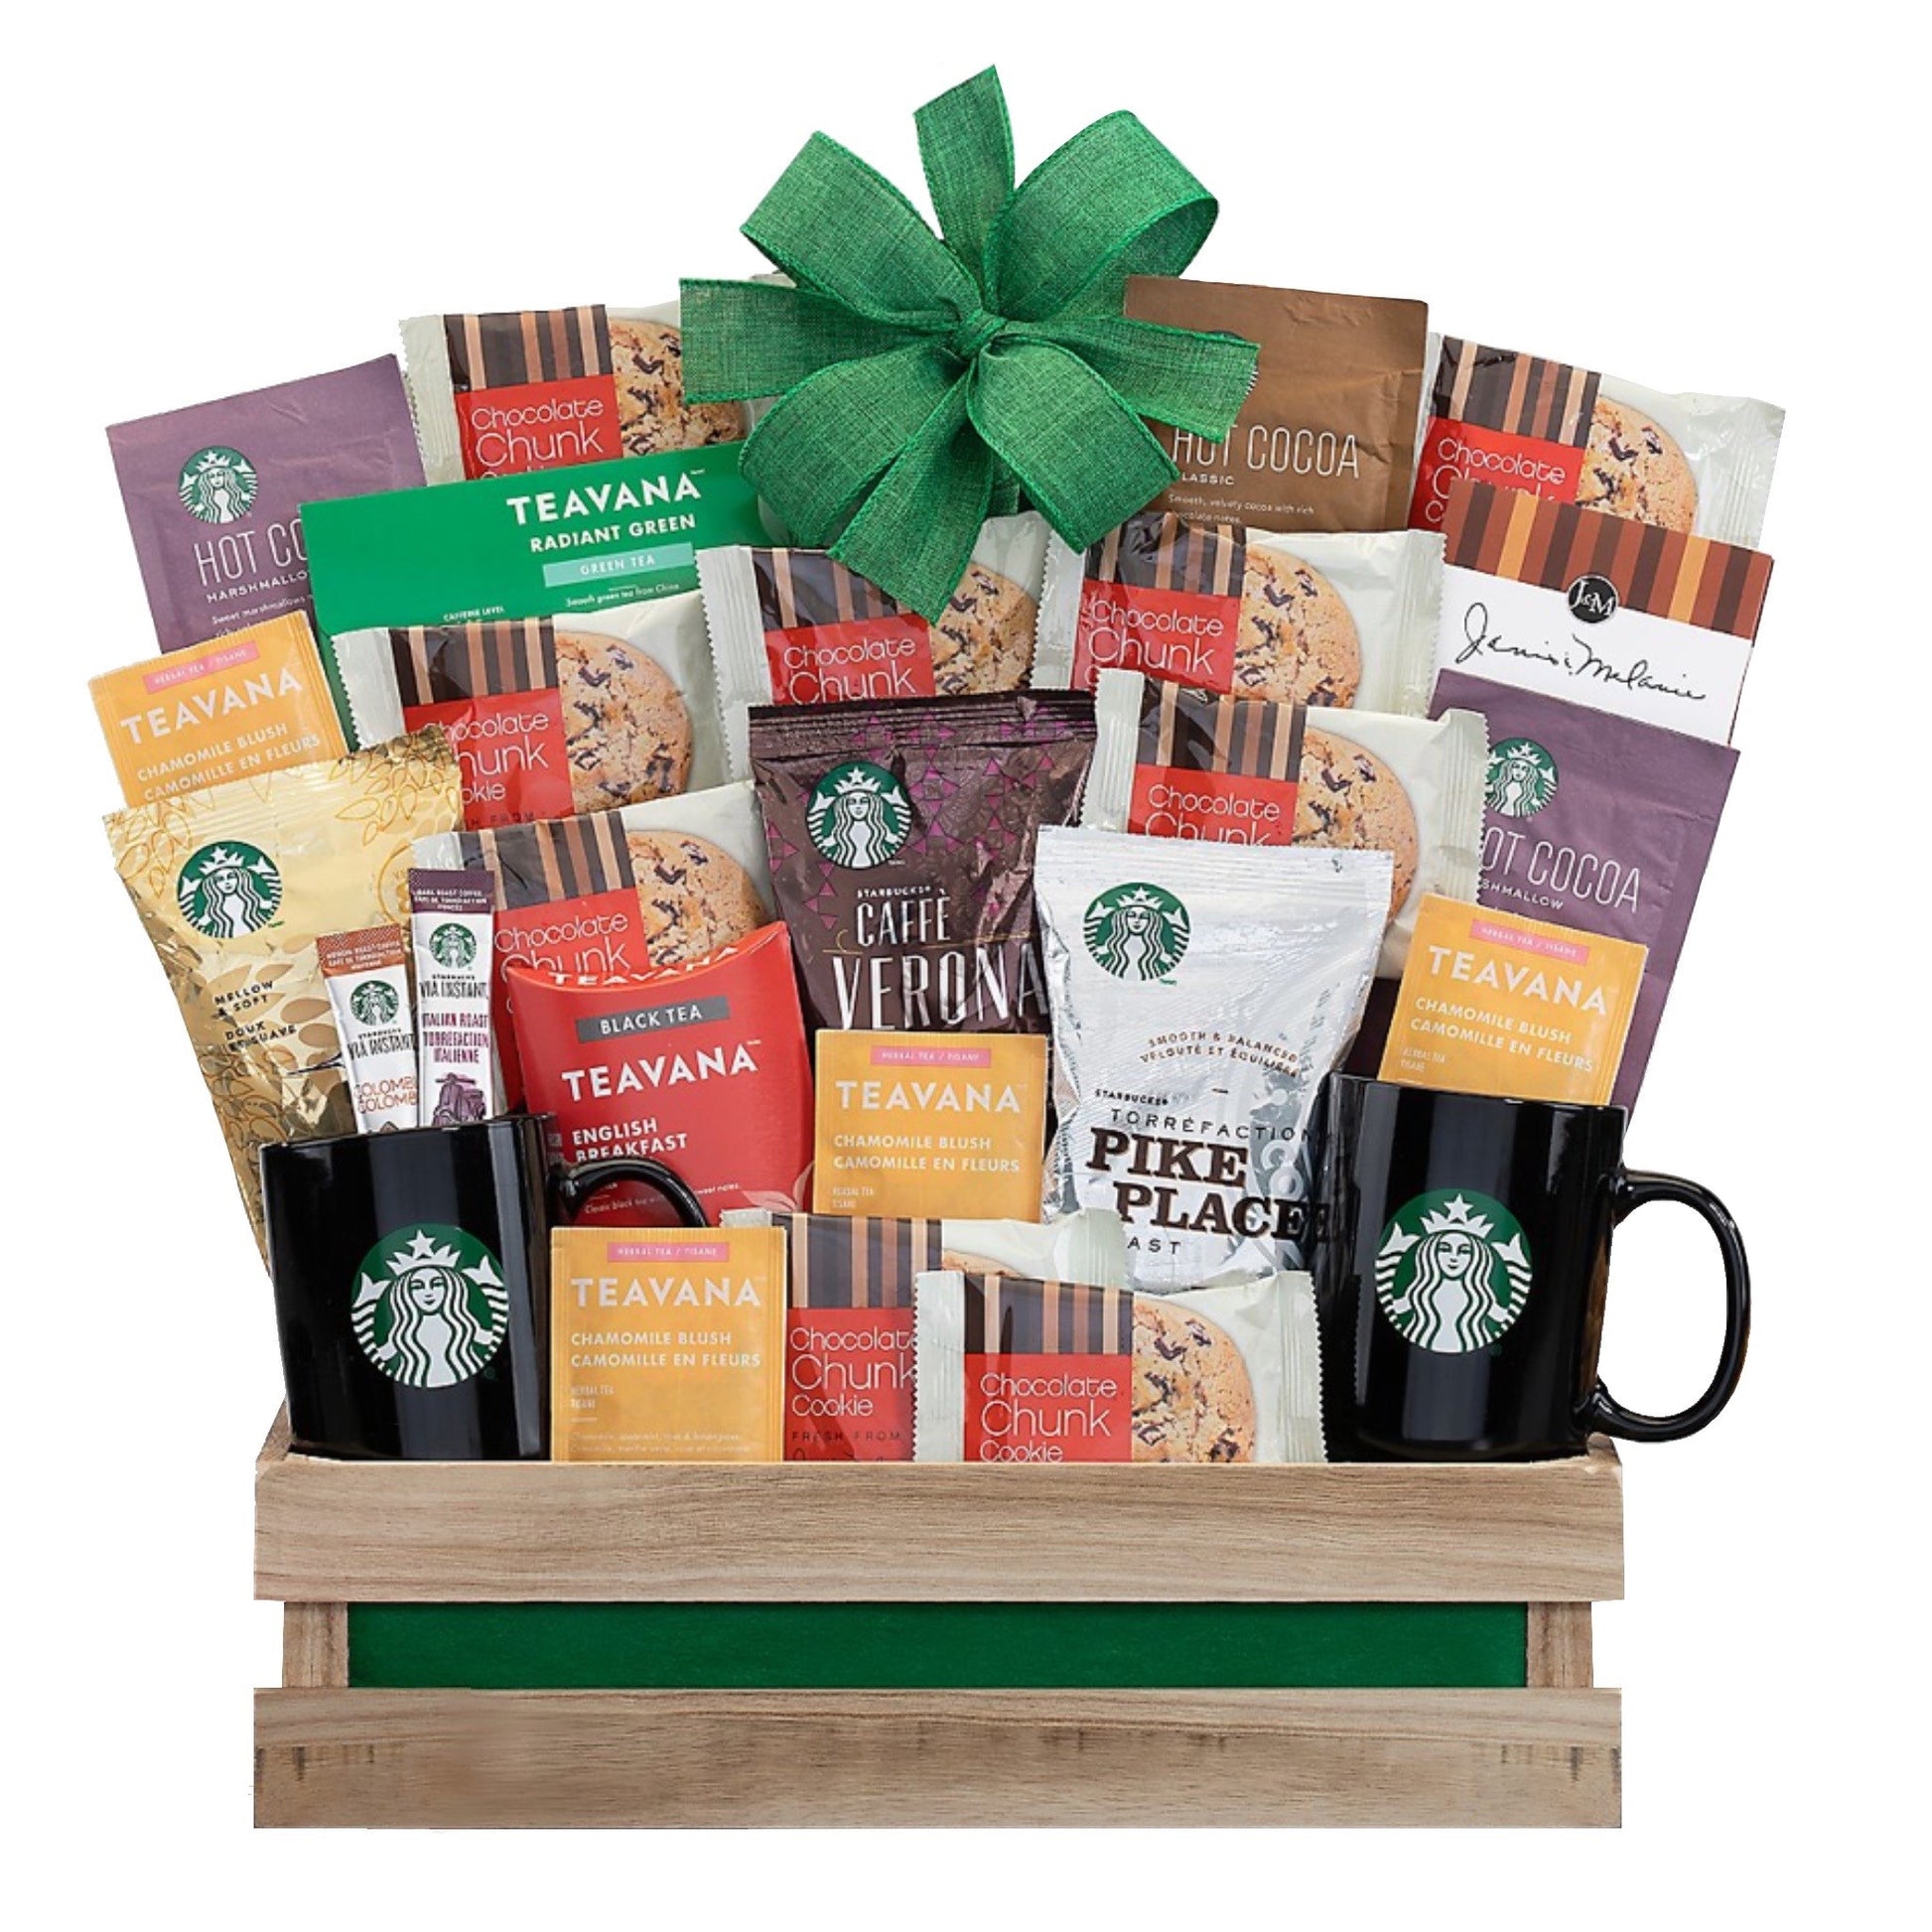 Starbucks Coffee, Tea and Cookie Gift Baskets